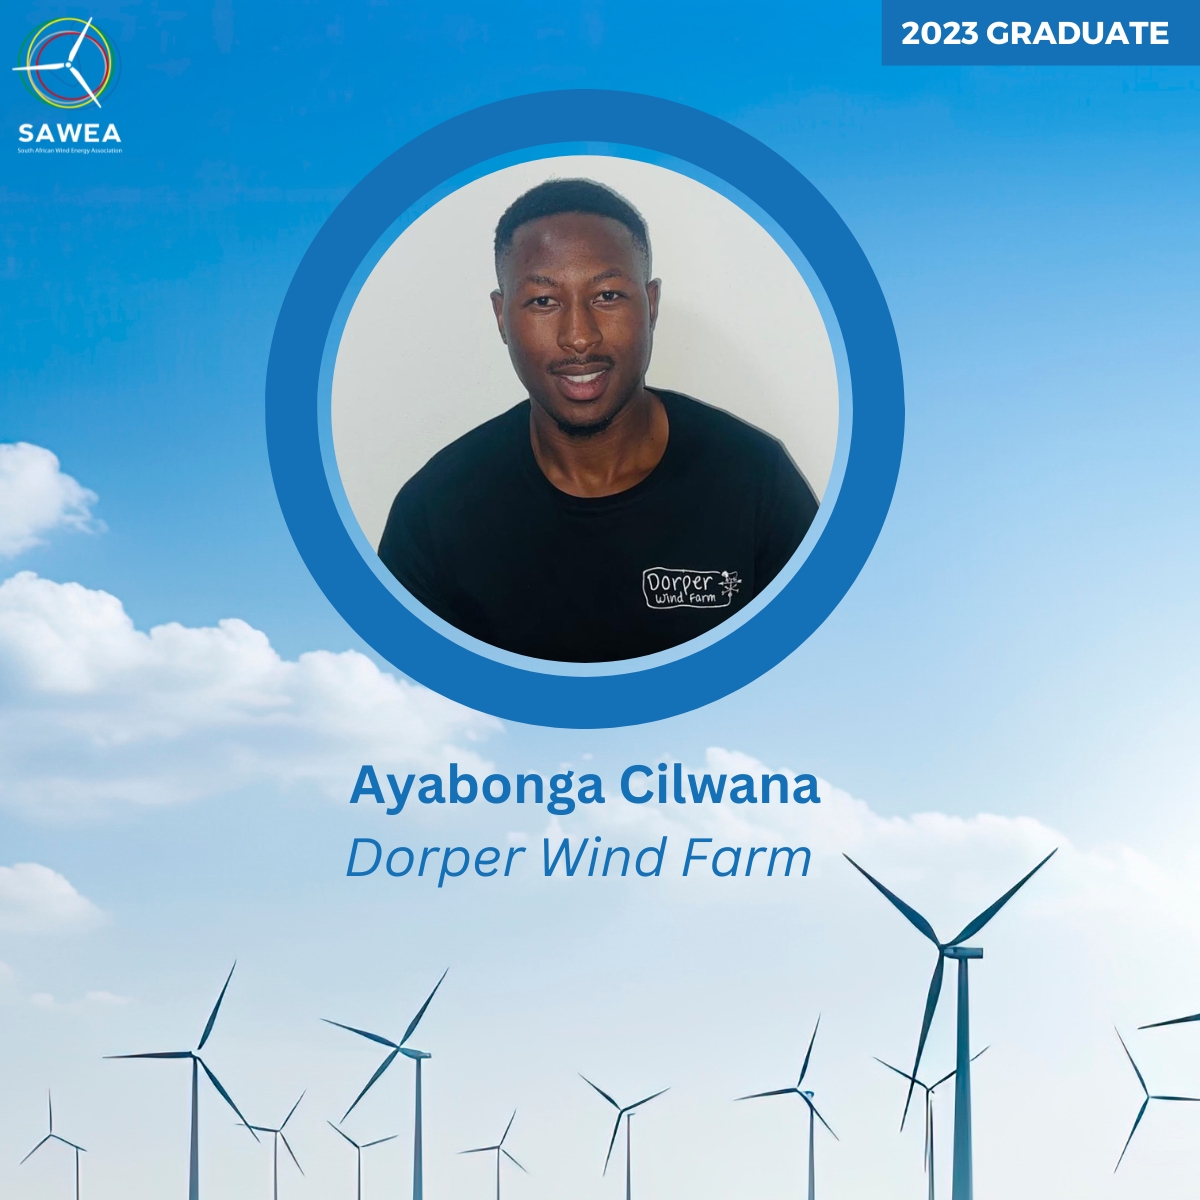 GRADUATION SEASON 👨‍🎓 Congratulations to Dorper Wind Farm's intern, Ayabonga Cilwana for completing his National Diploma in Electrical Engineering at the @WalterSisuluUni . #2023graduate #leadingwithwind #sawea